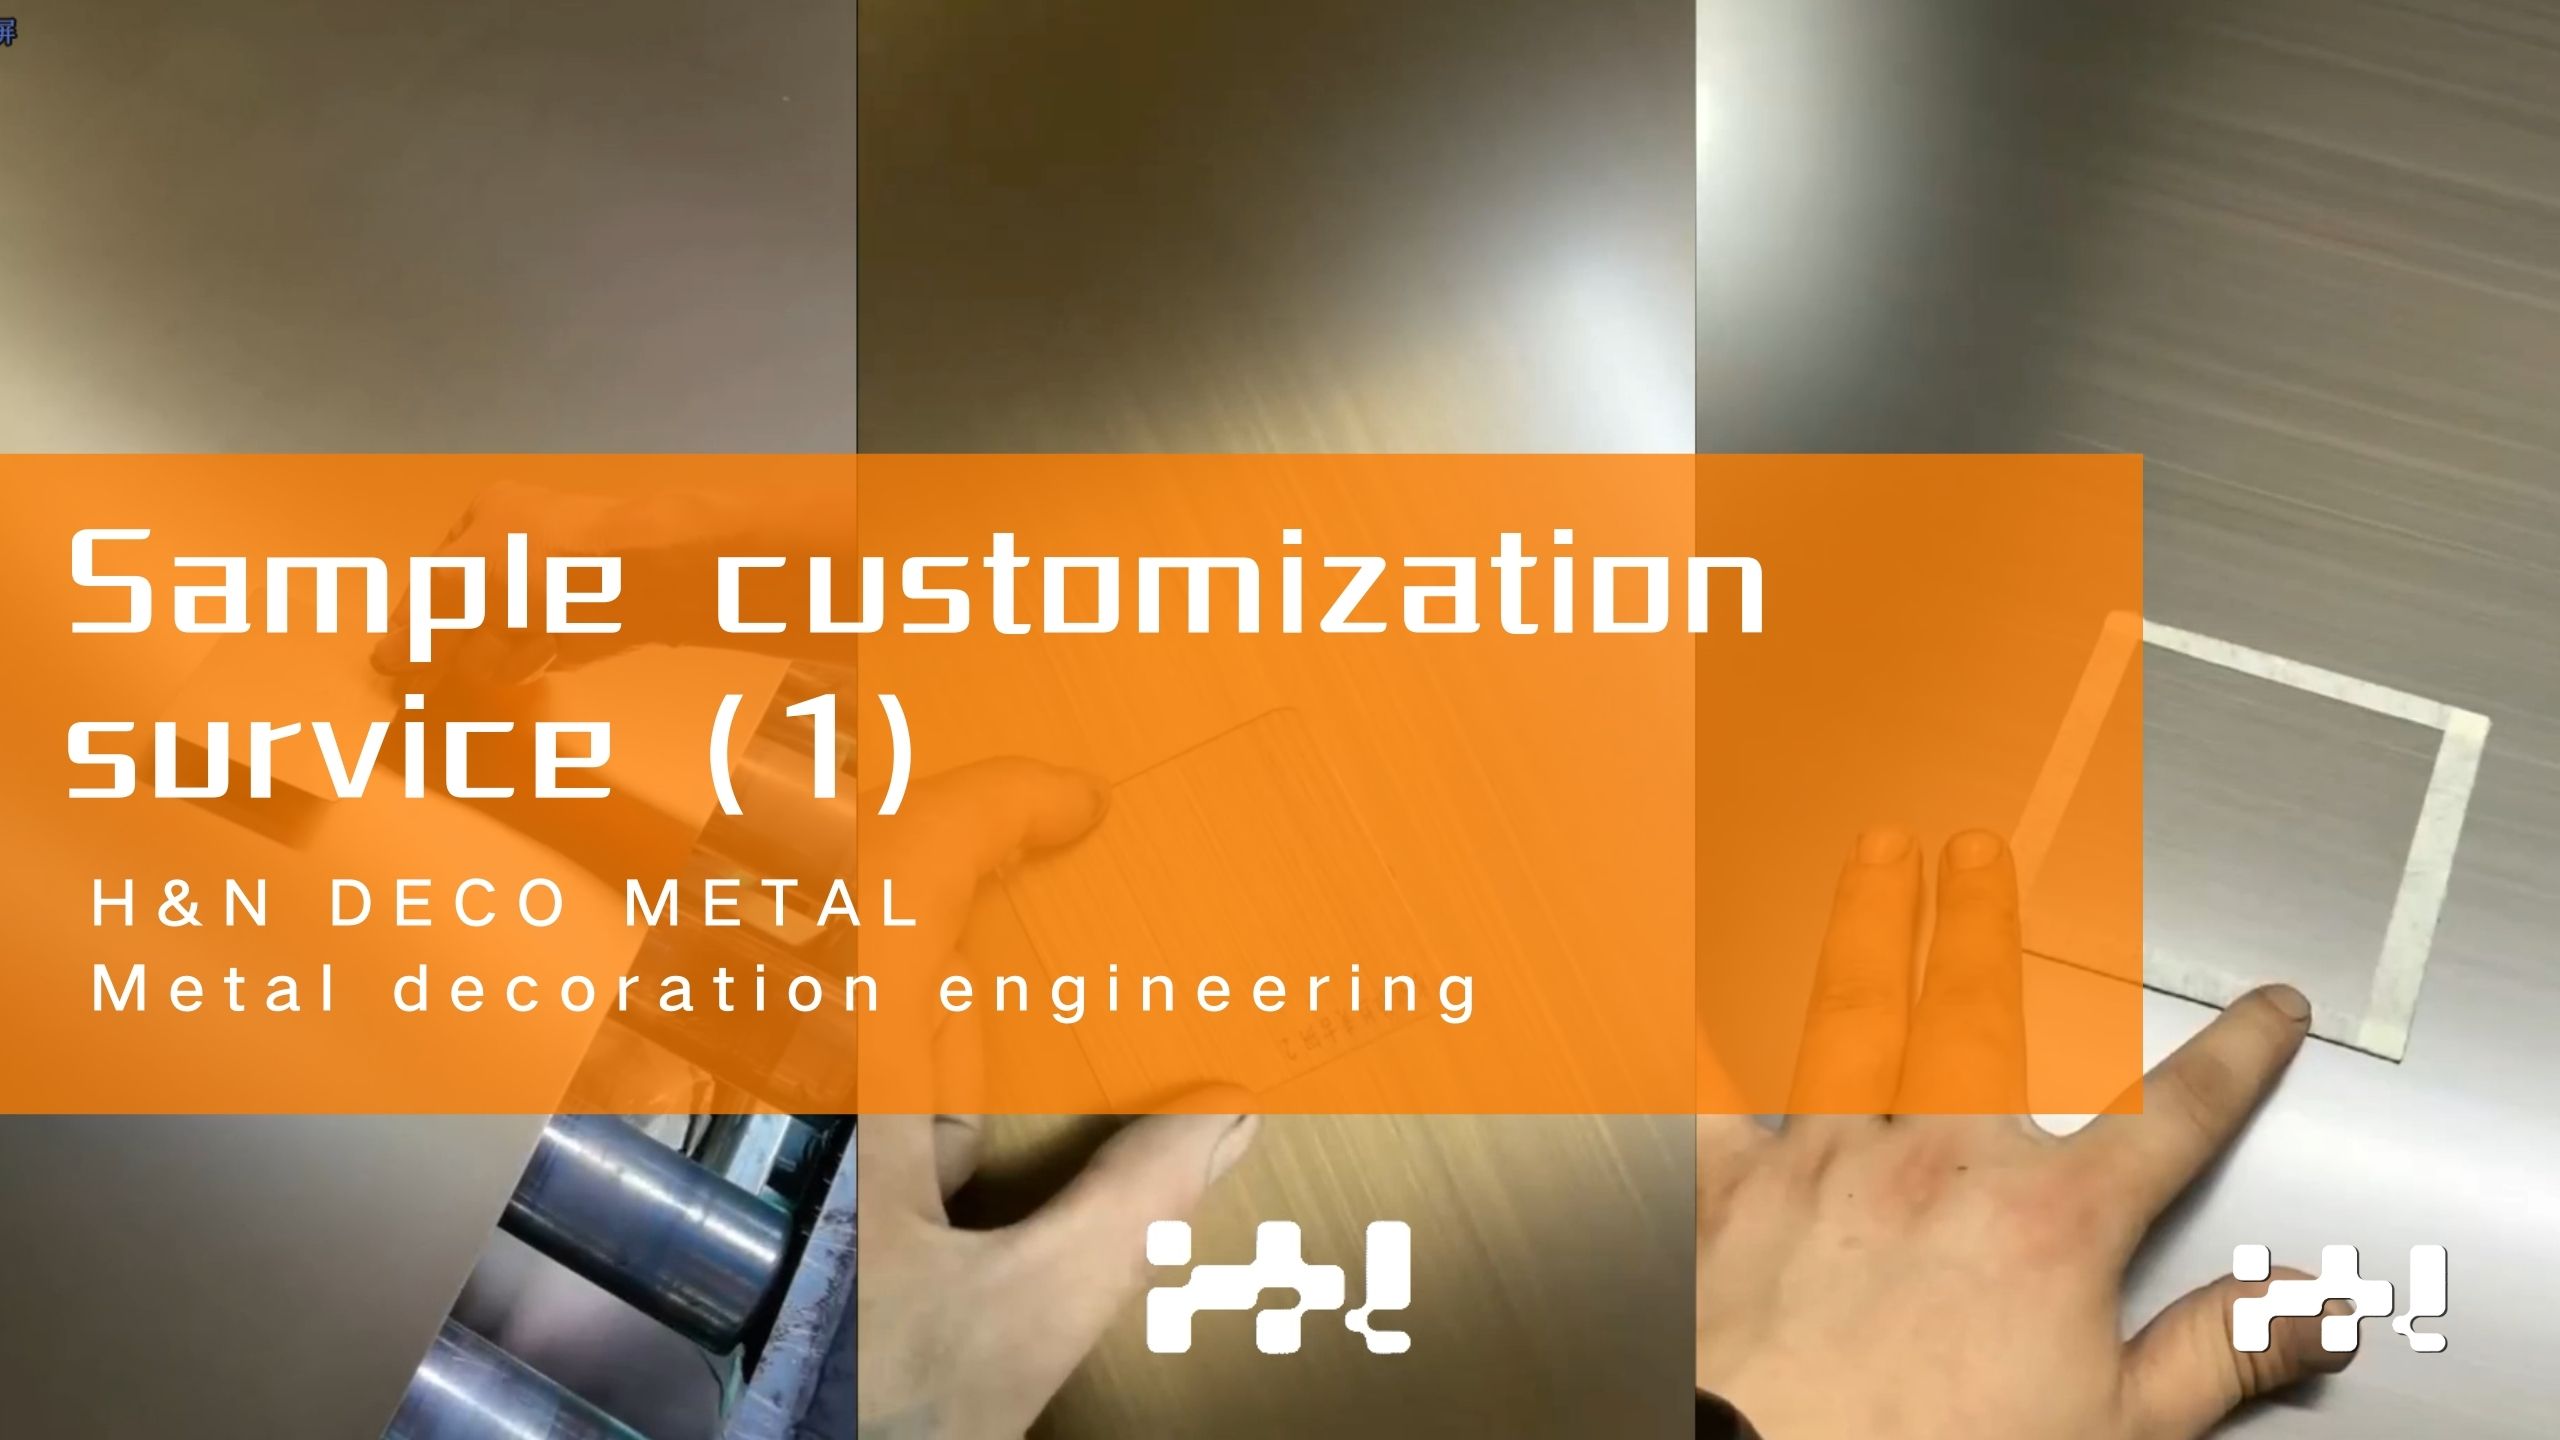 Stainless steel sample Customization Service(1)